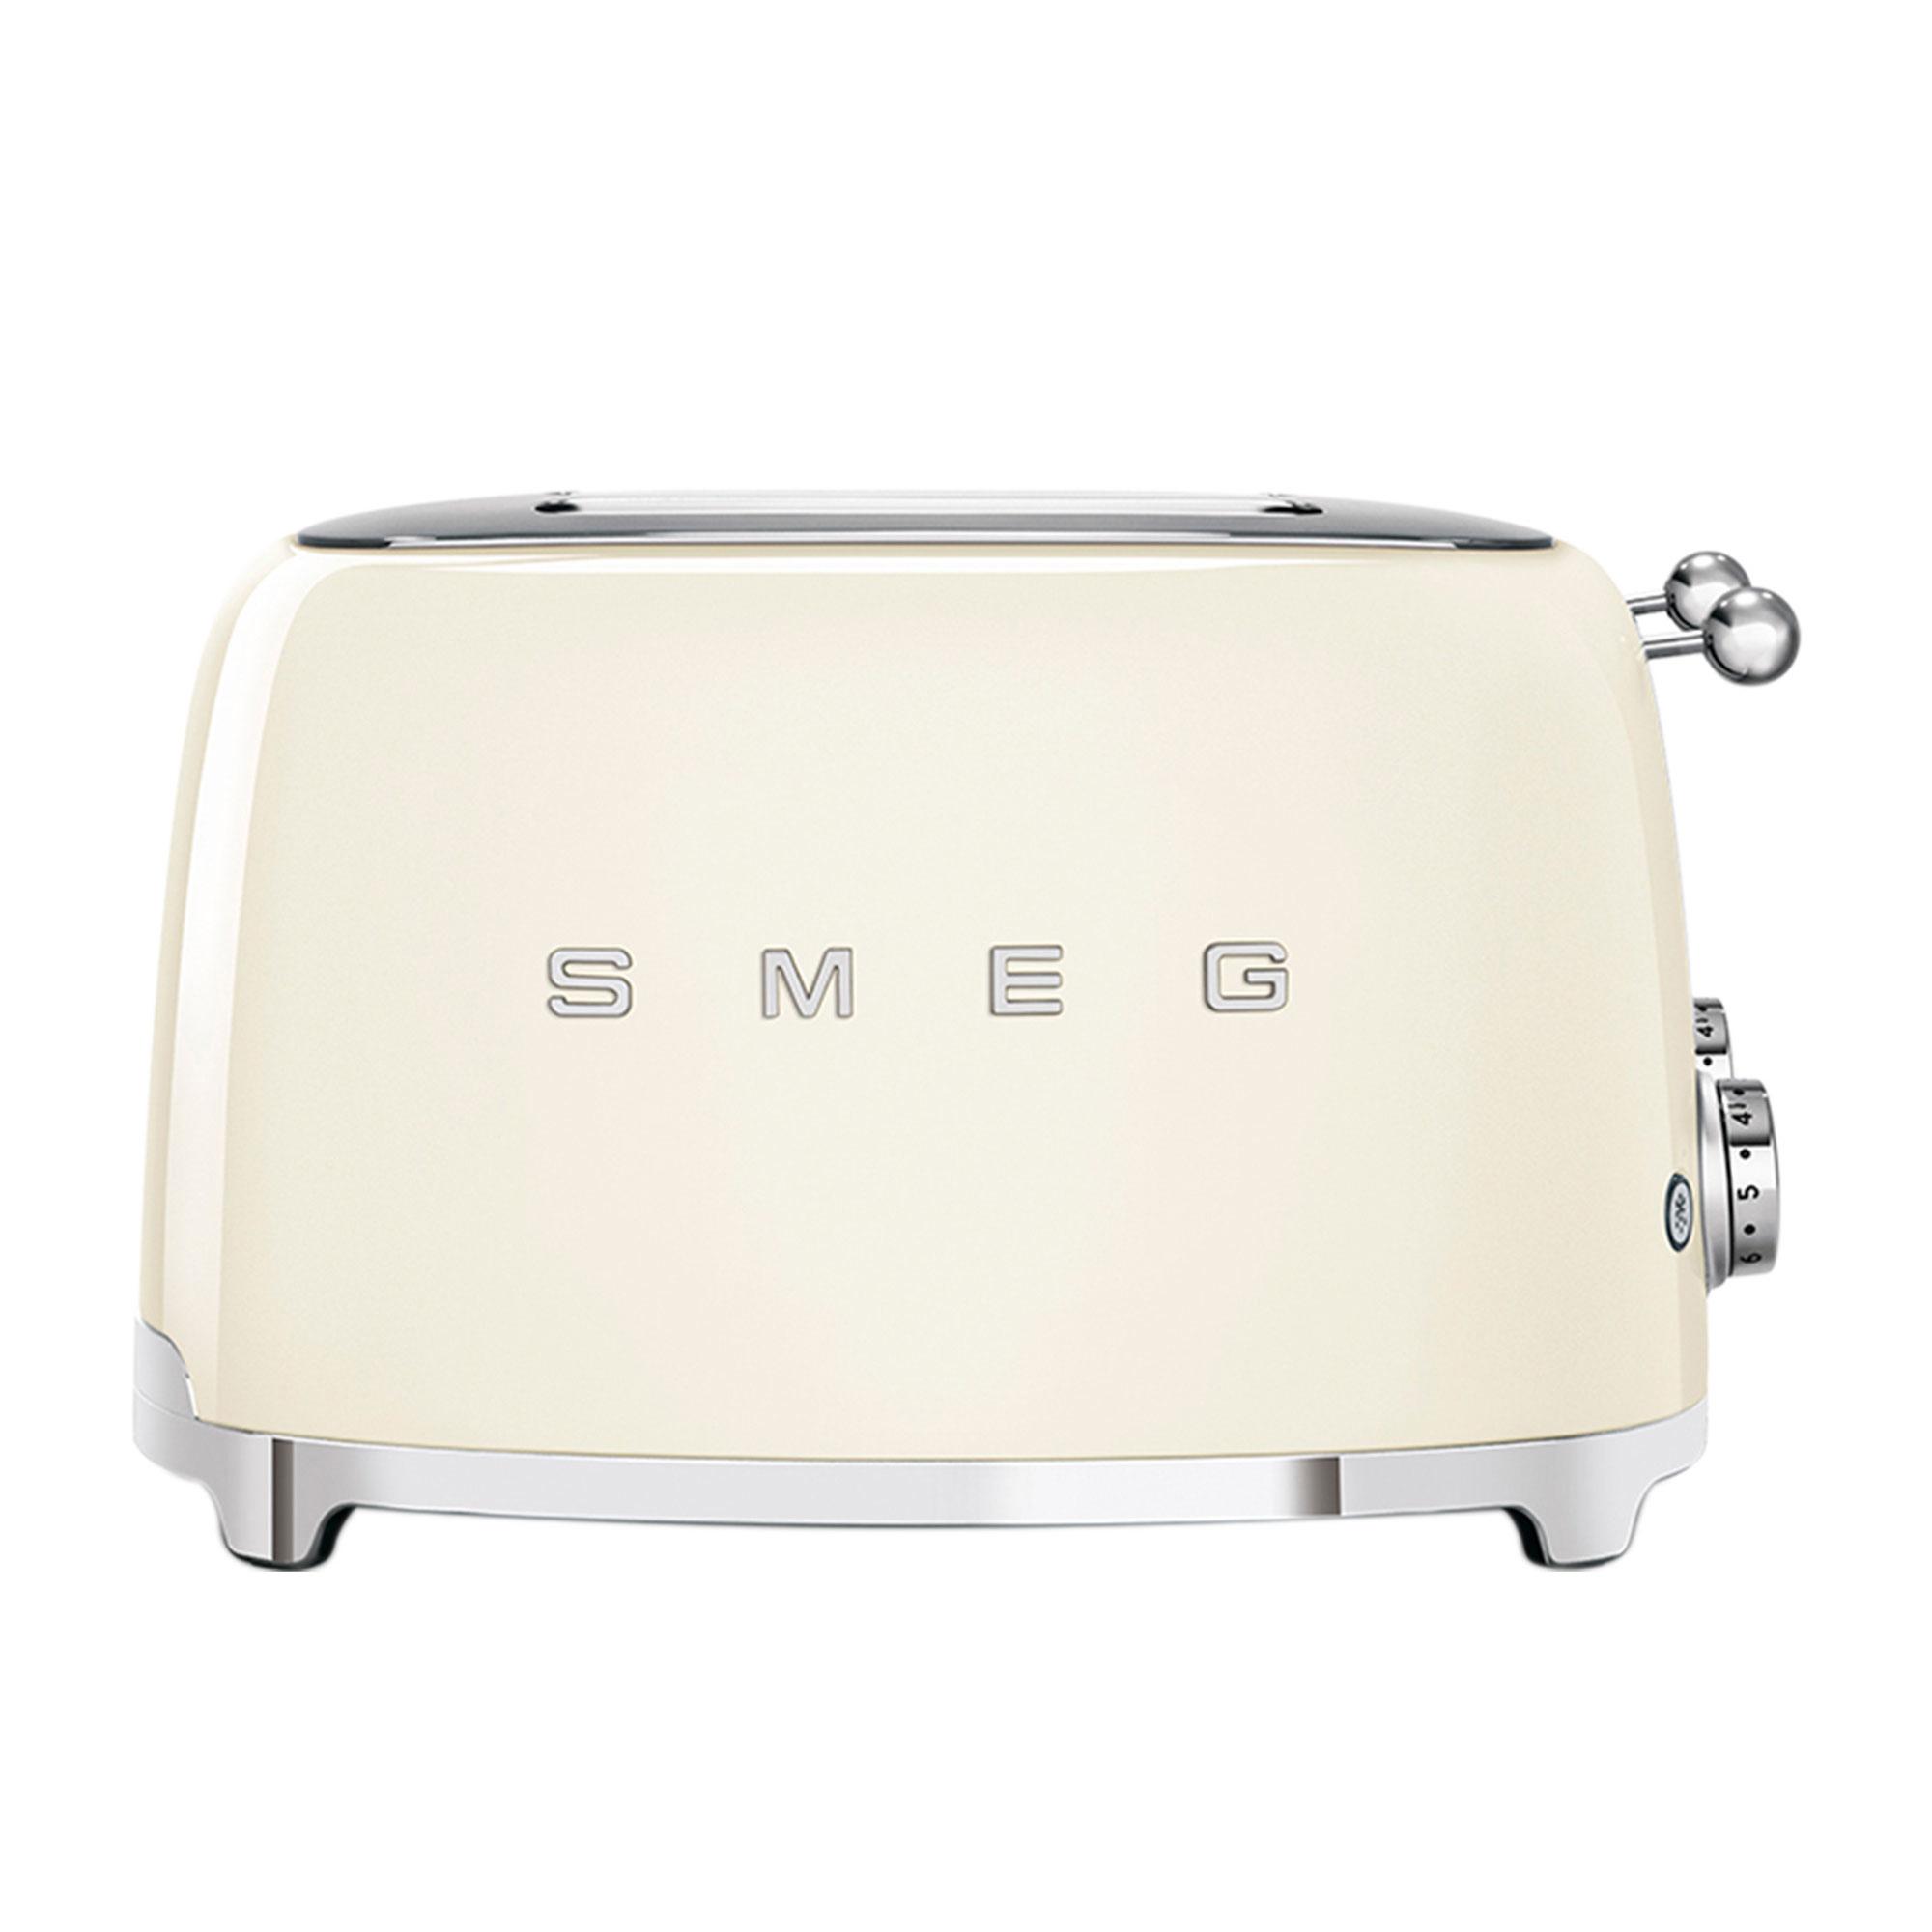 Smeg 50's Retro Style 4 Slot Toaster Cream Image 5